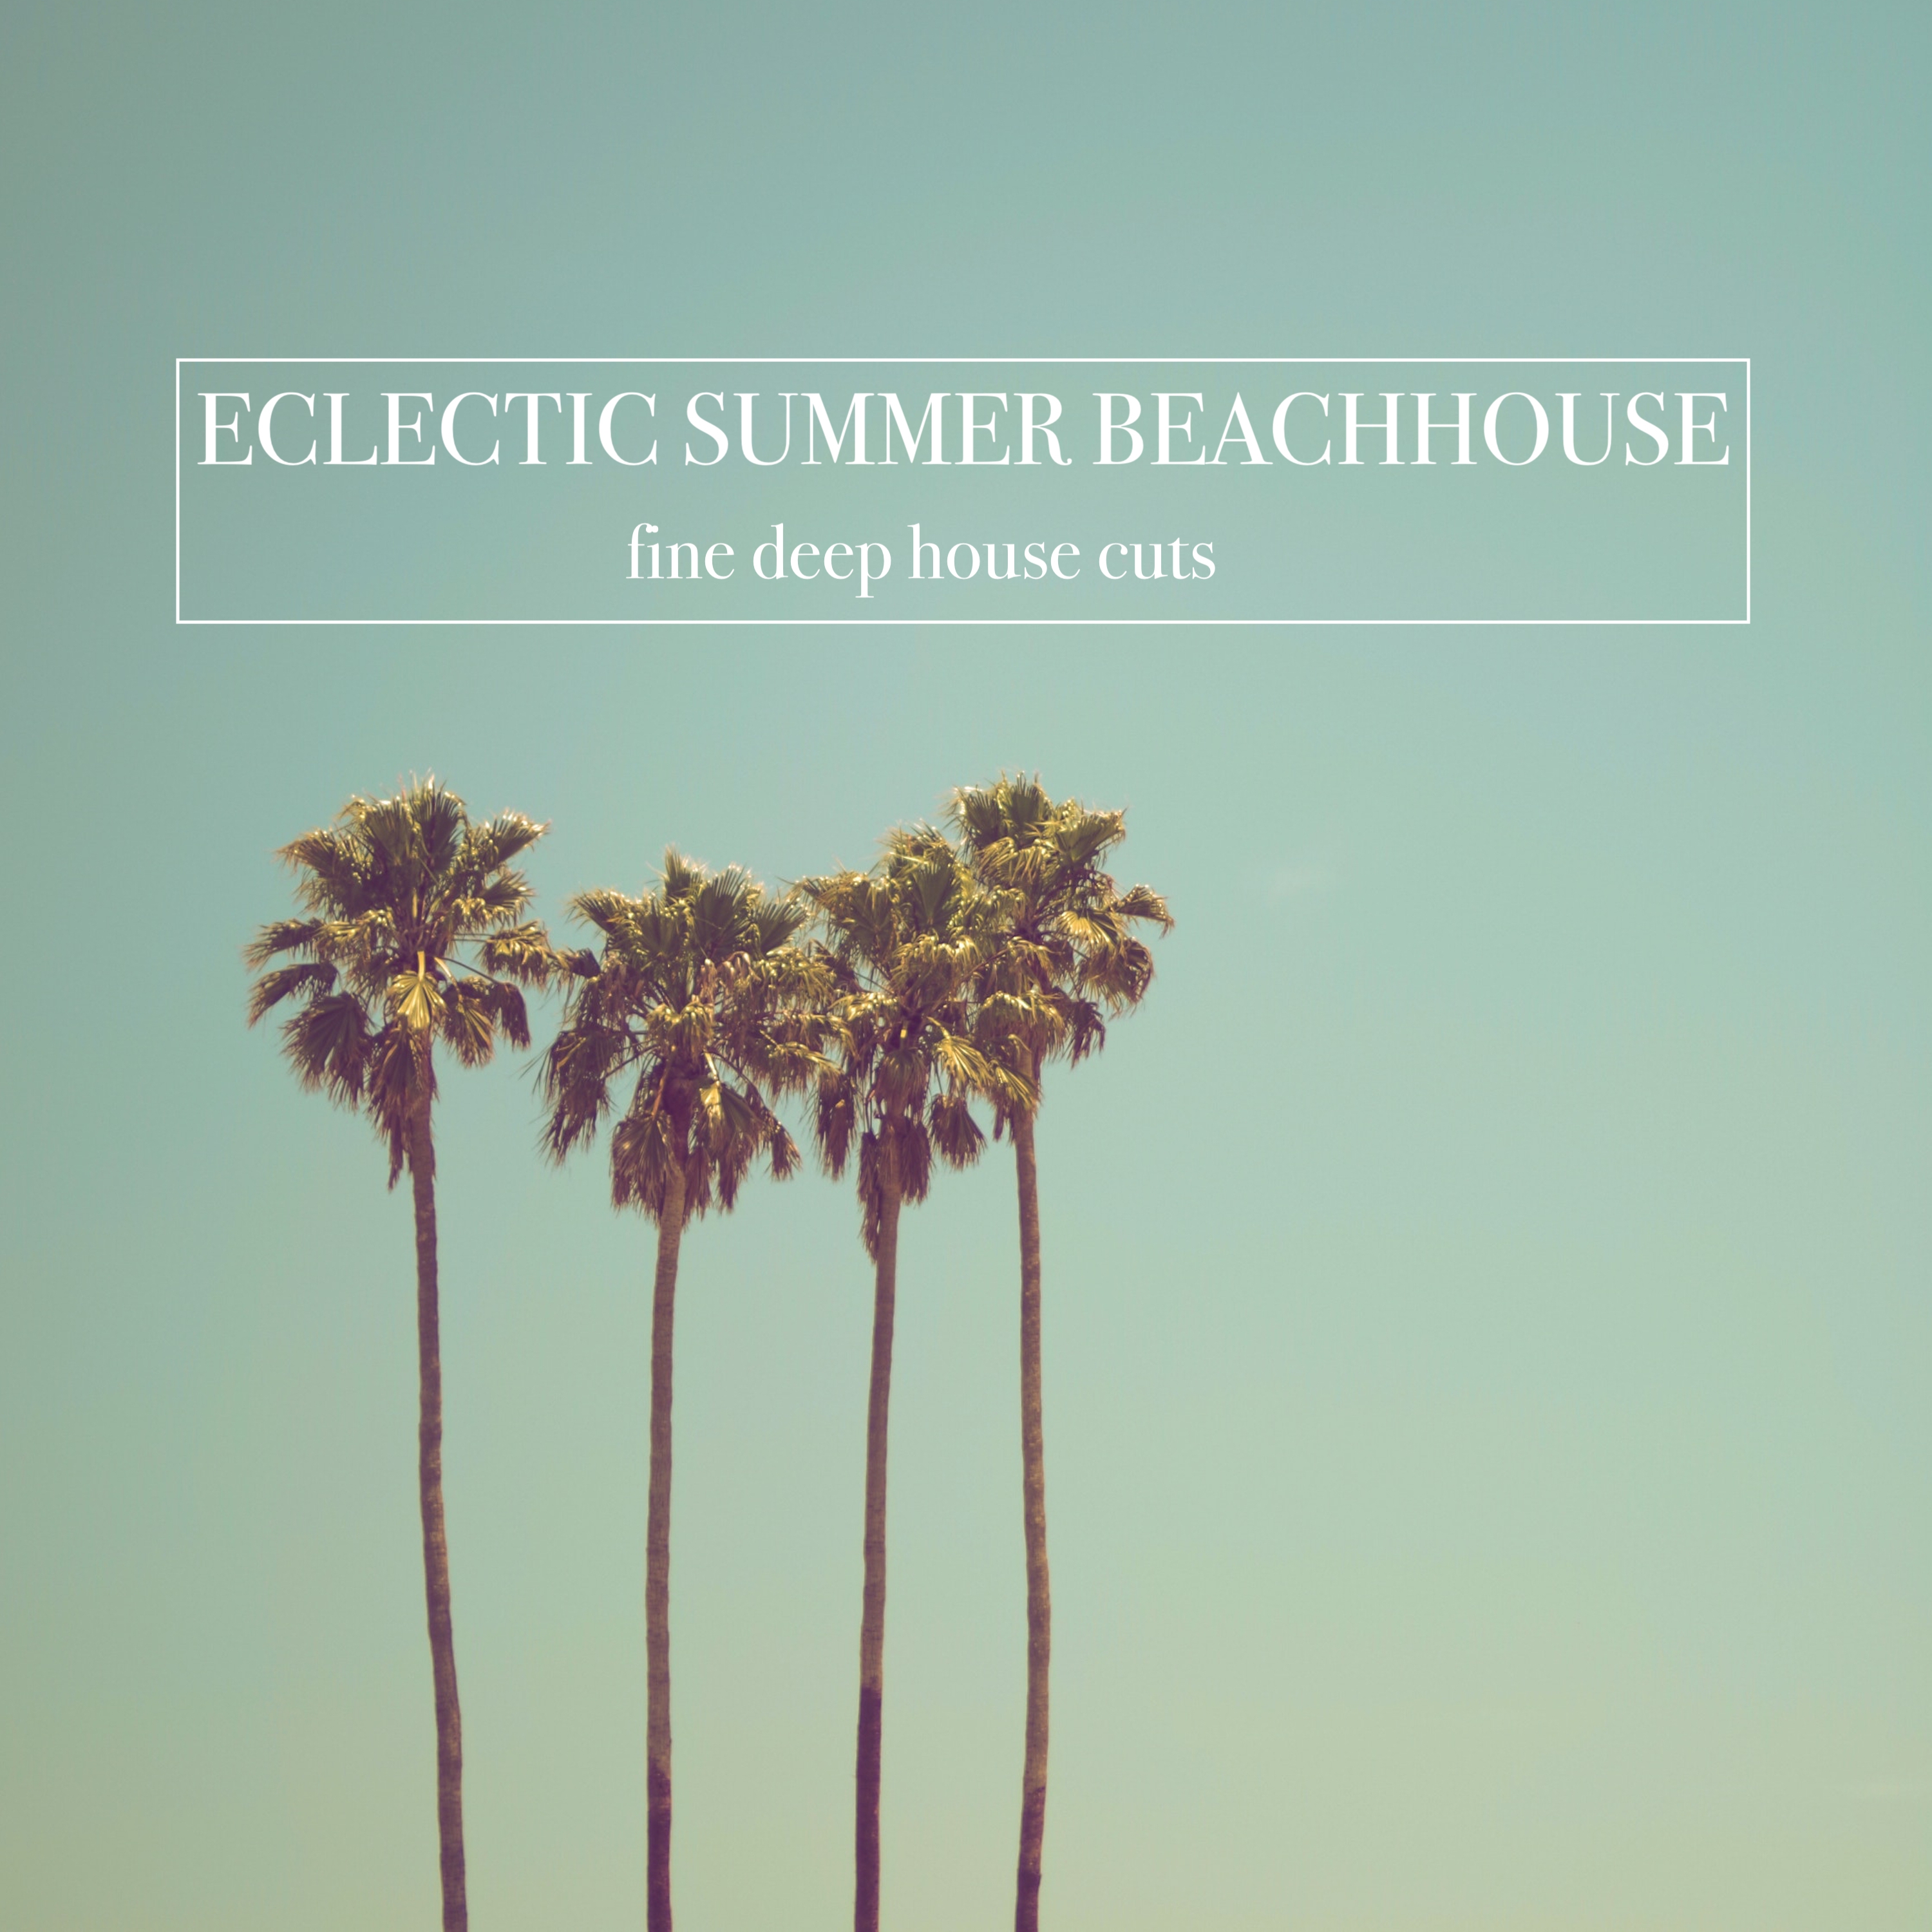 Eclectic Summer Beachhouse